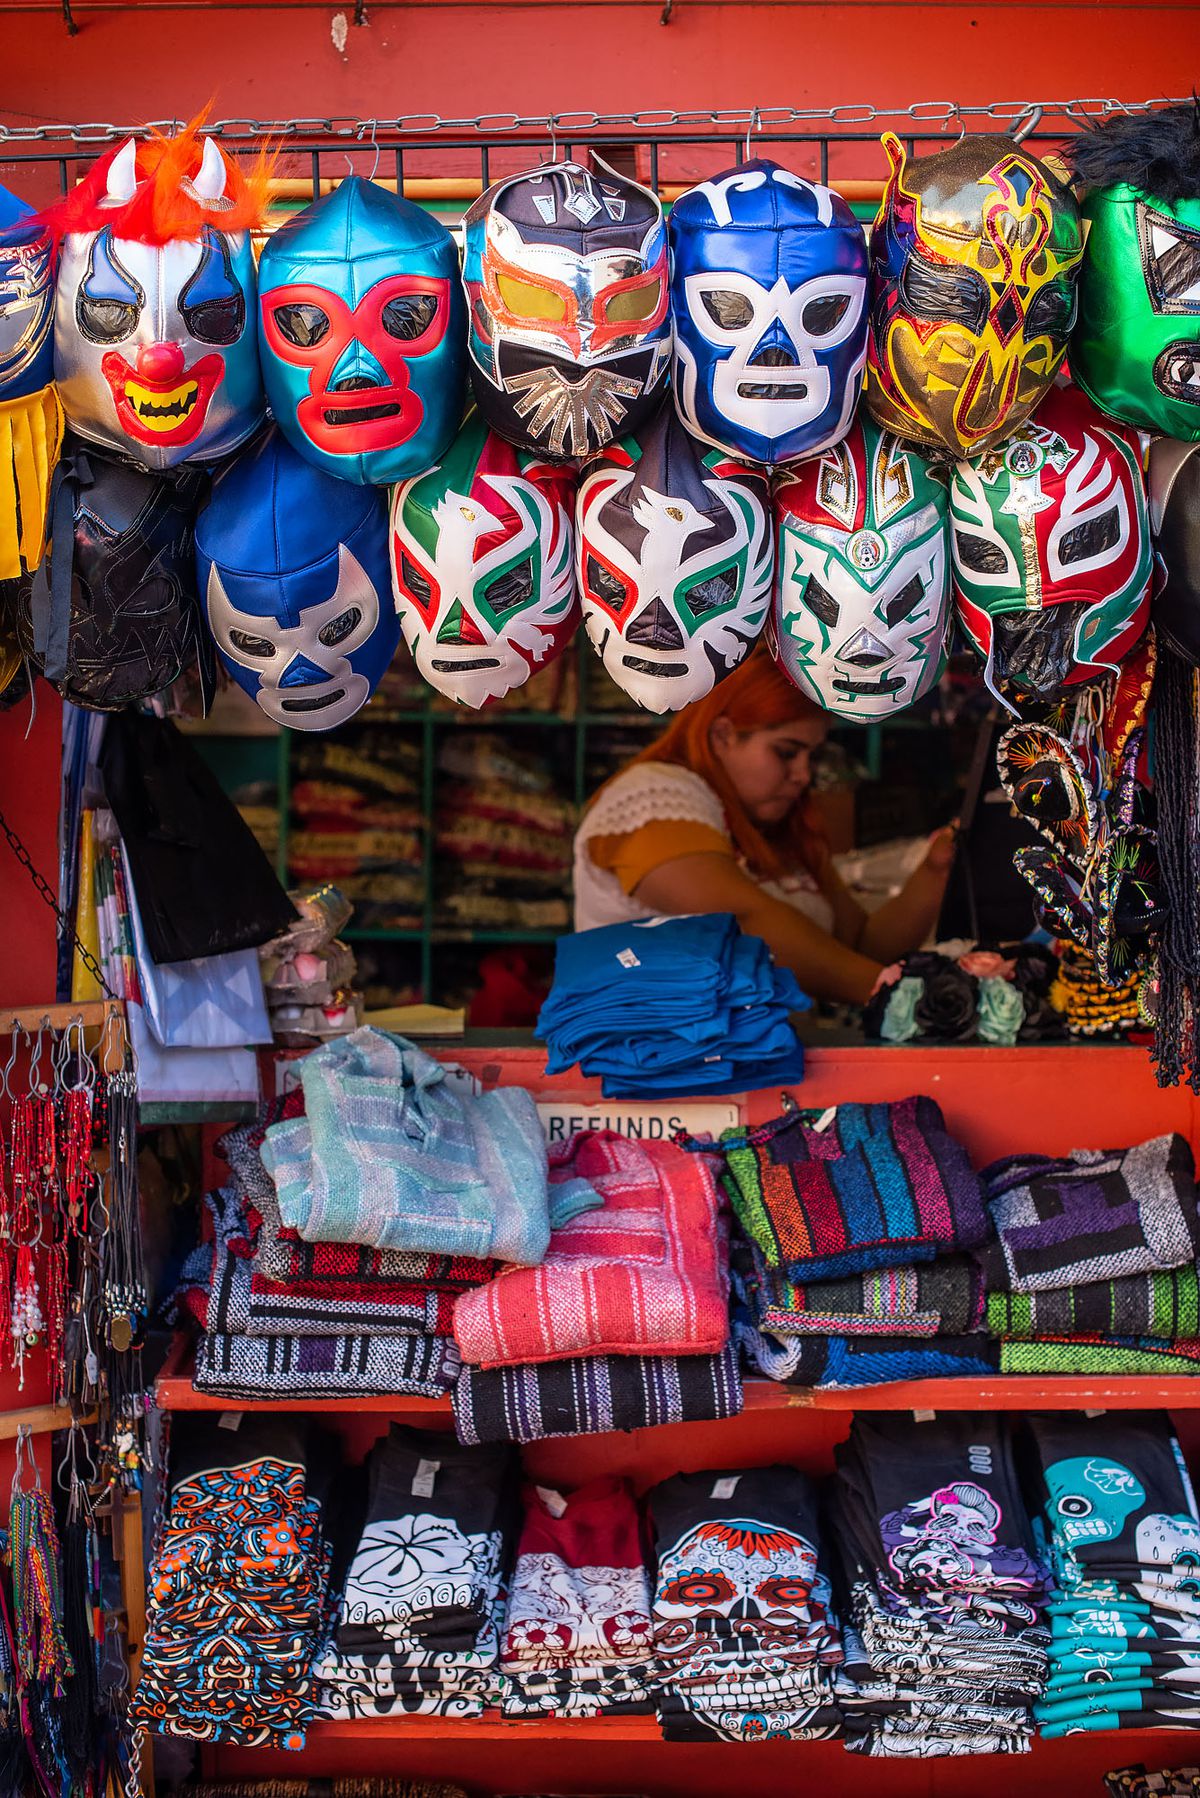 Vendor at Olvera Street selling luchador masks, T-shirts, and more